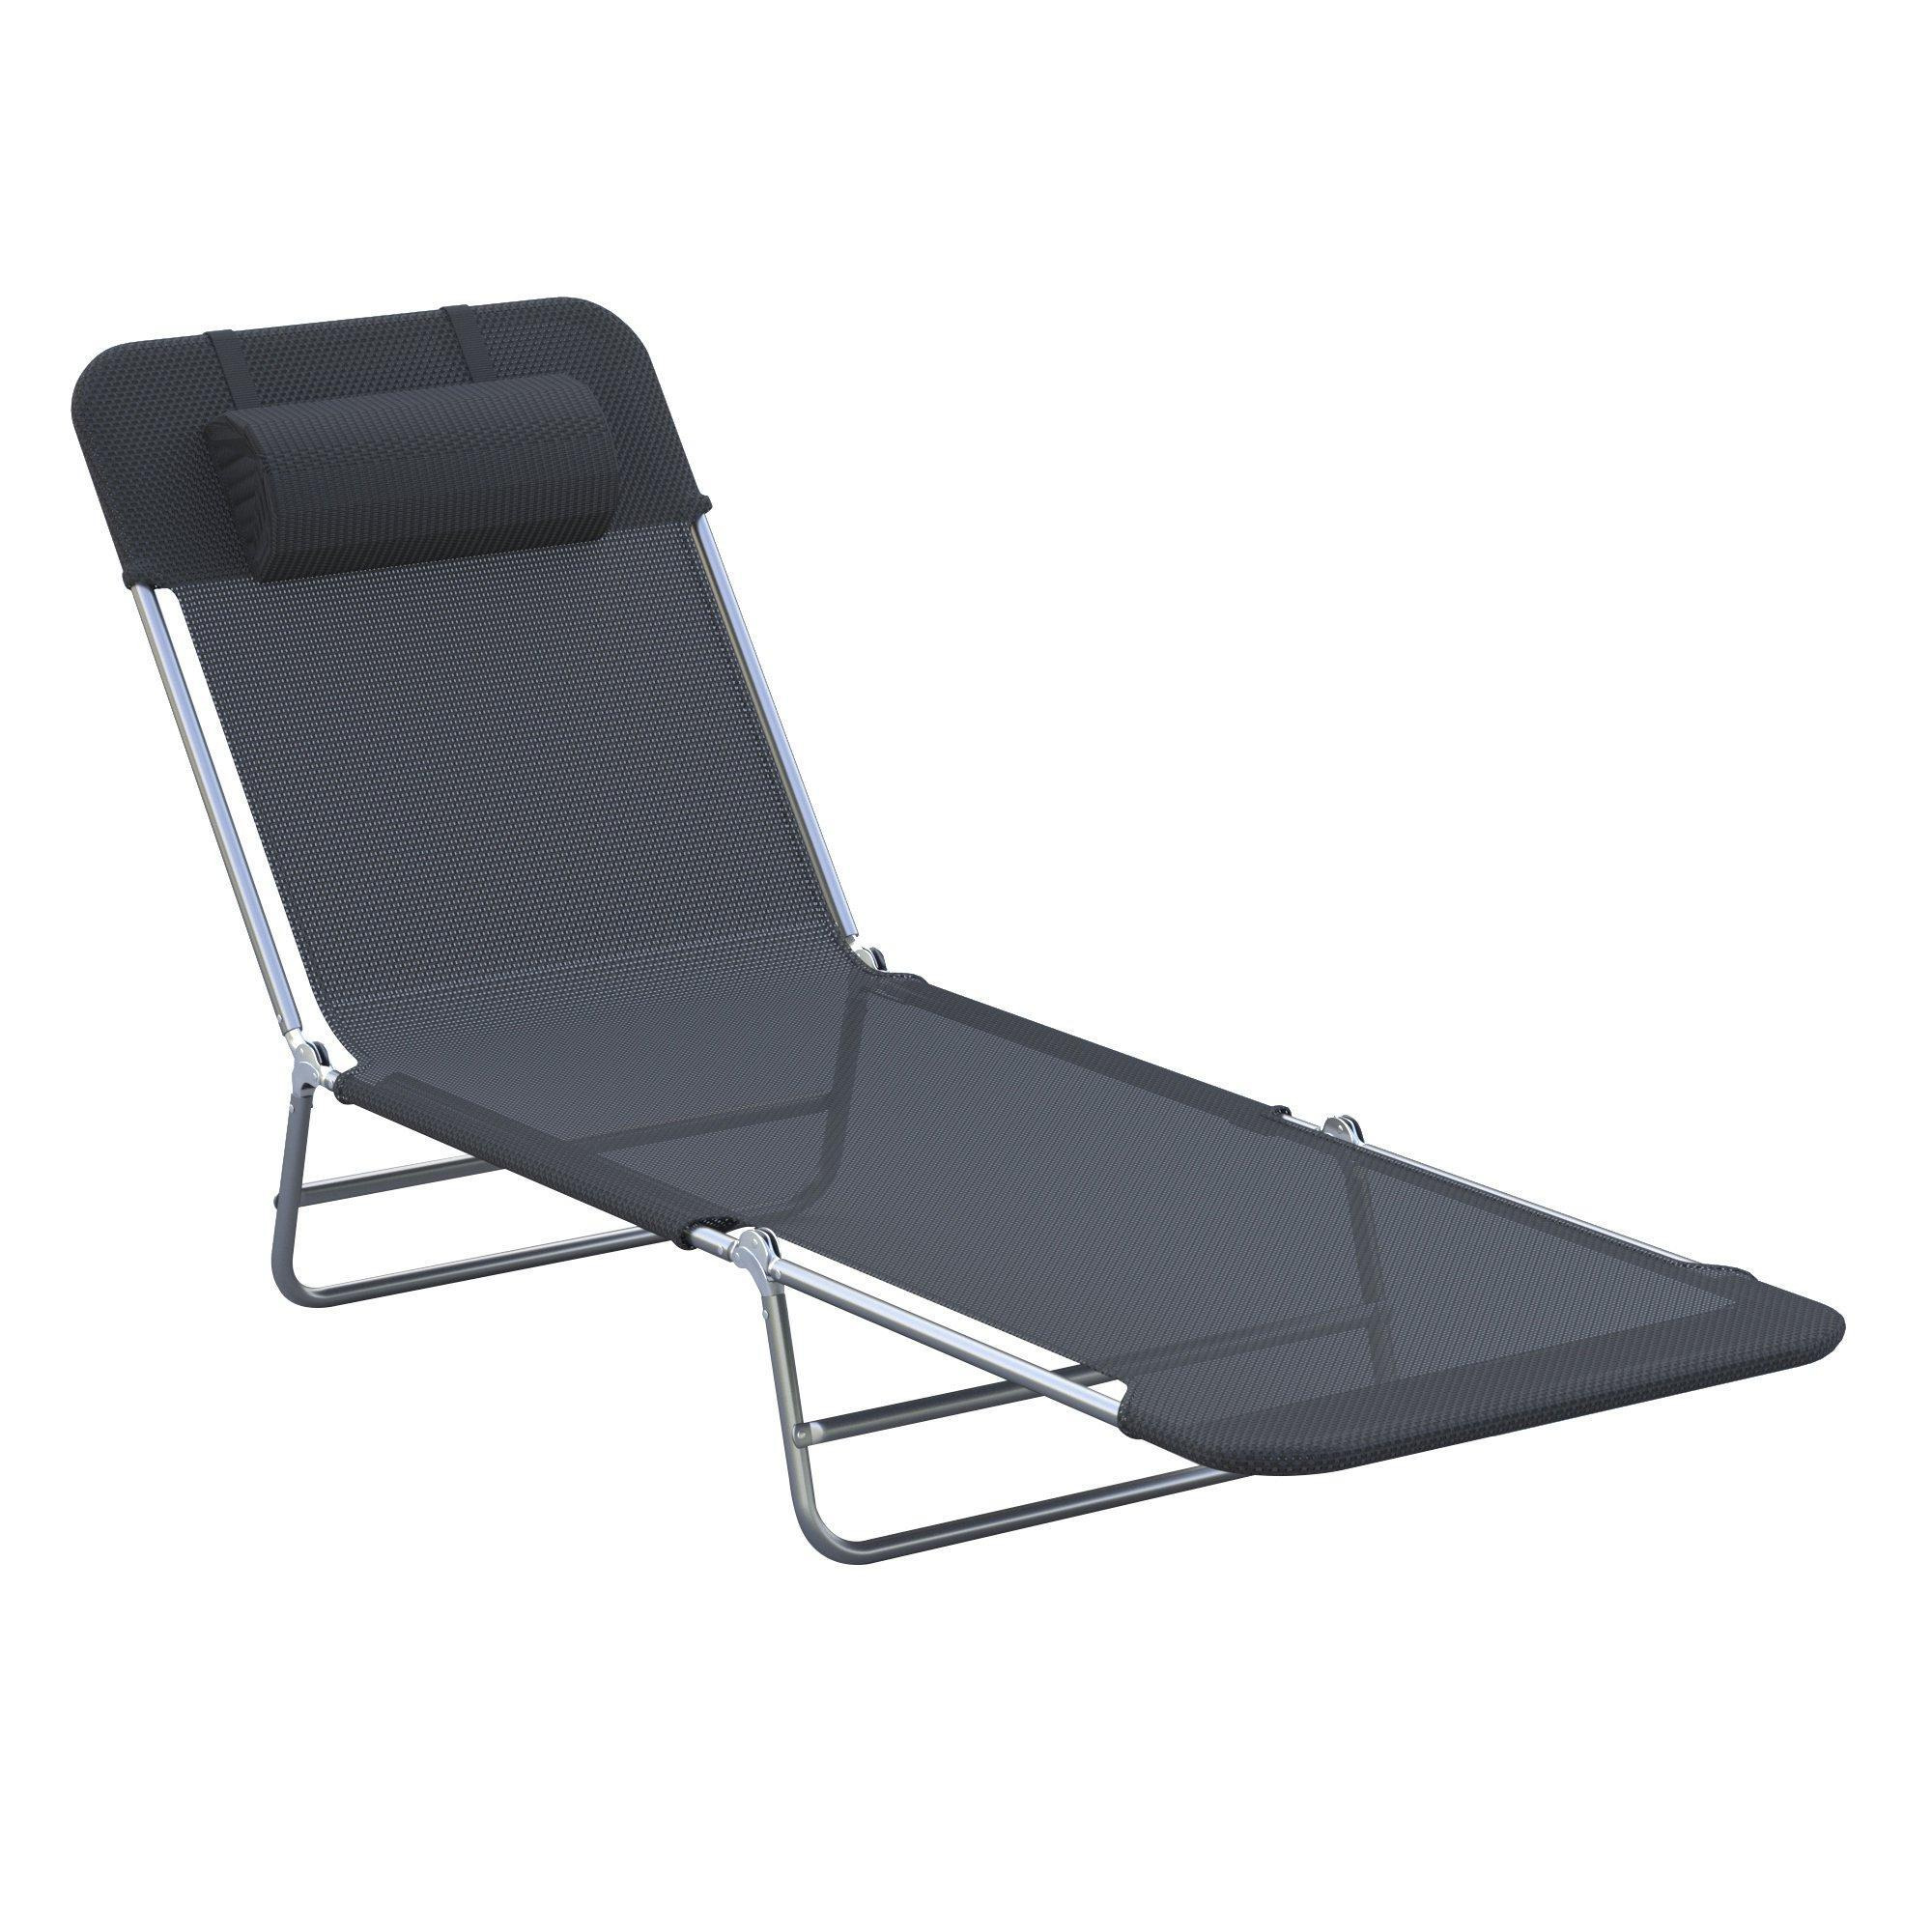 Adjustable Sun Bed Garden Lounger Recliner Relaxing Camping - image 1